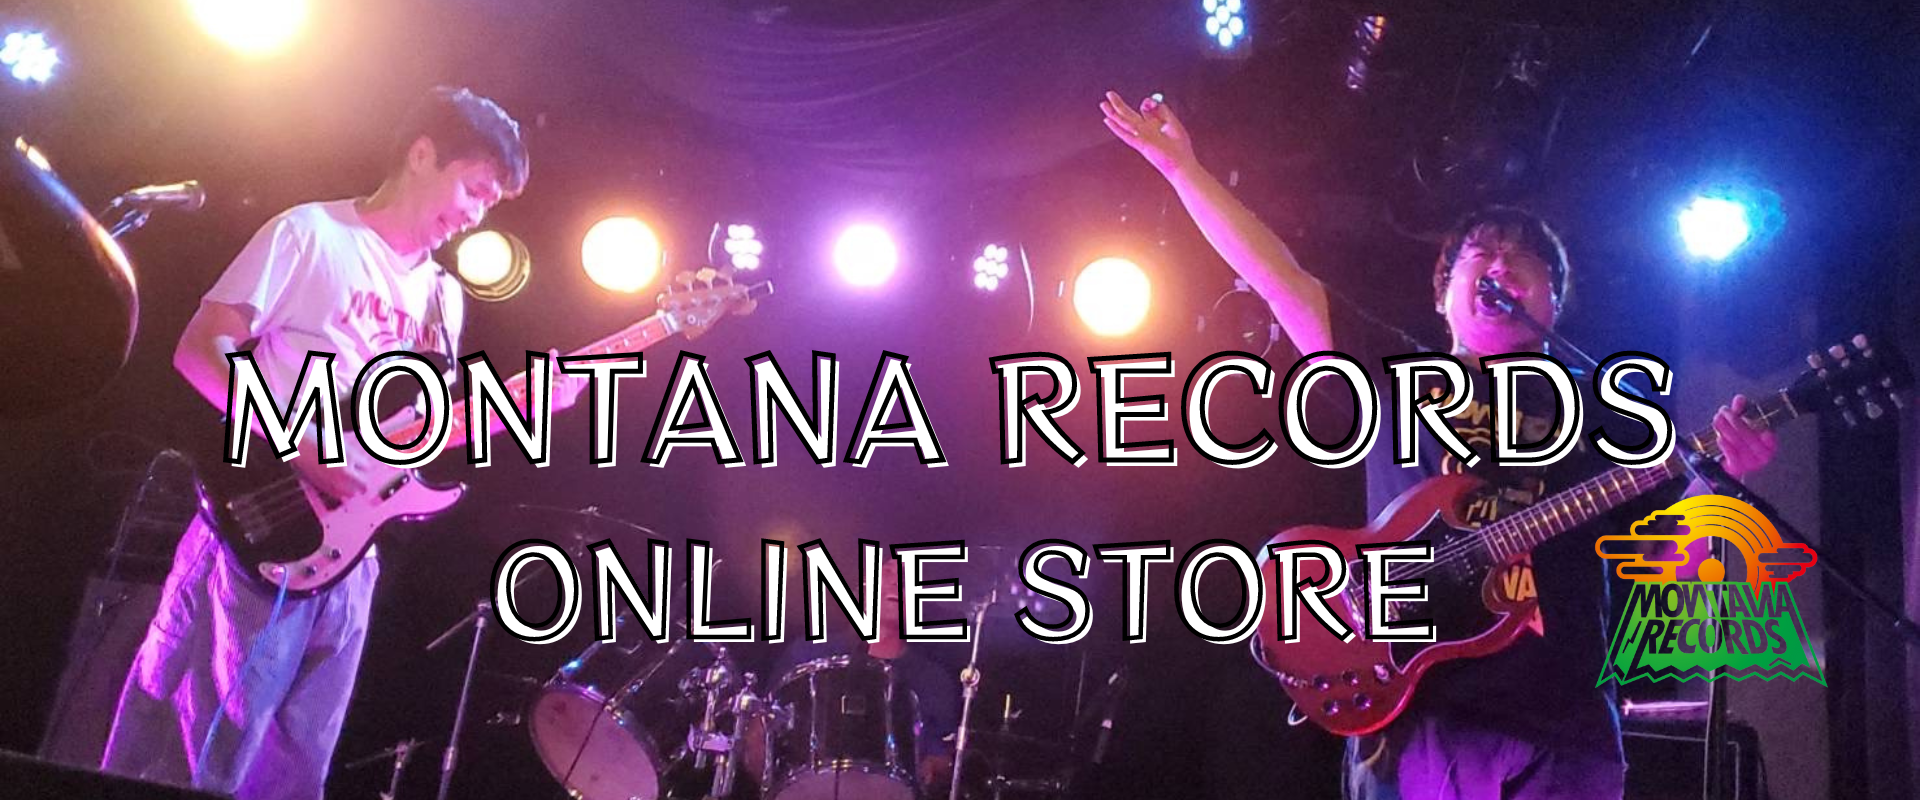 MONTANA RECORDS